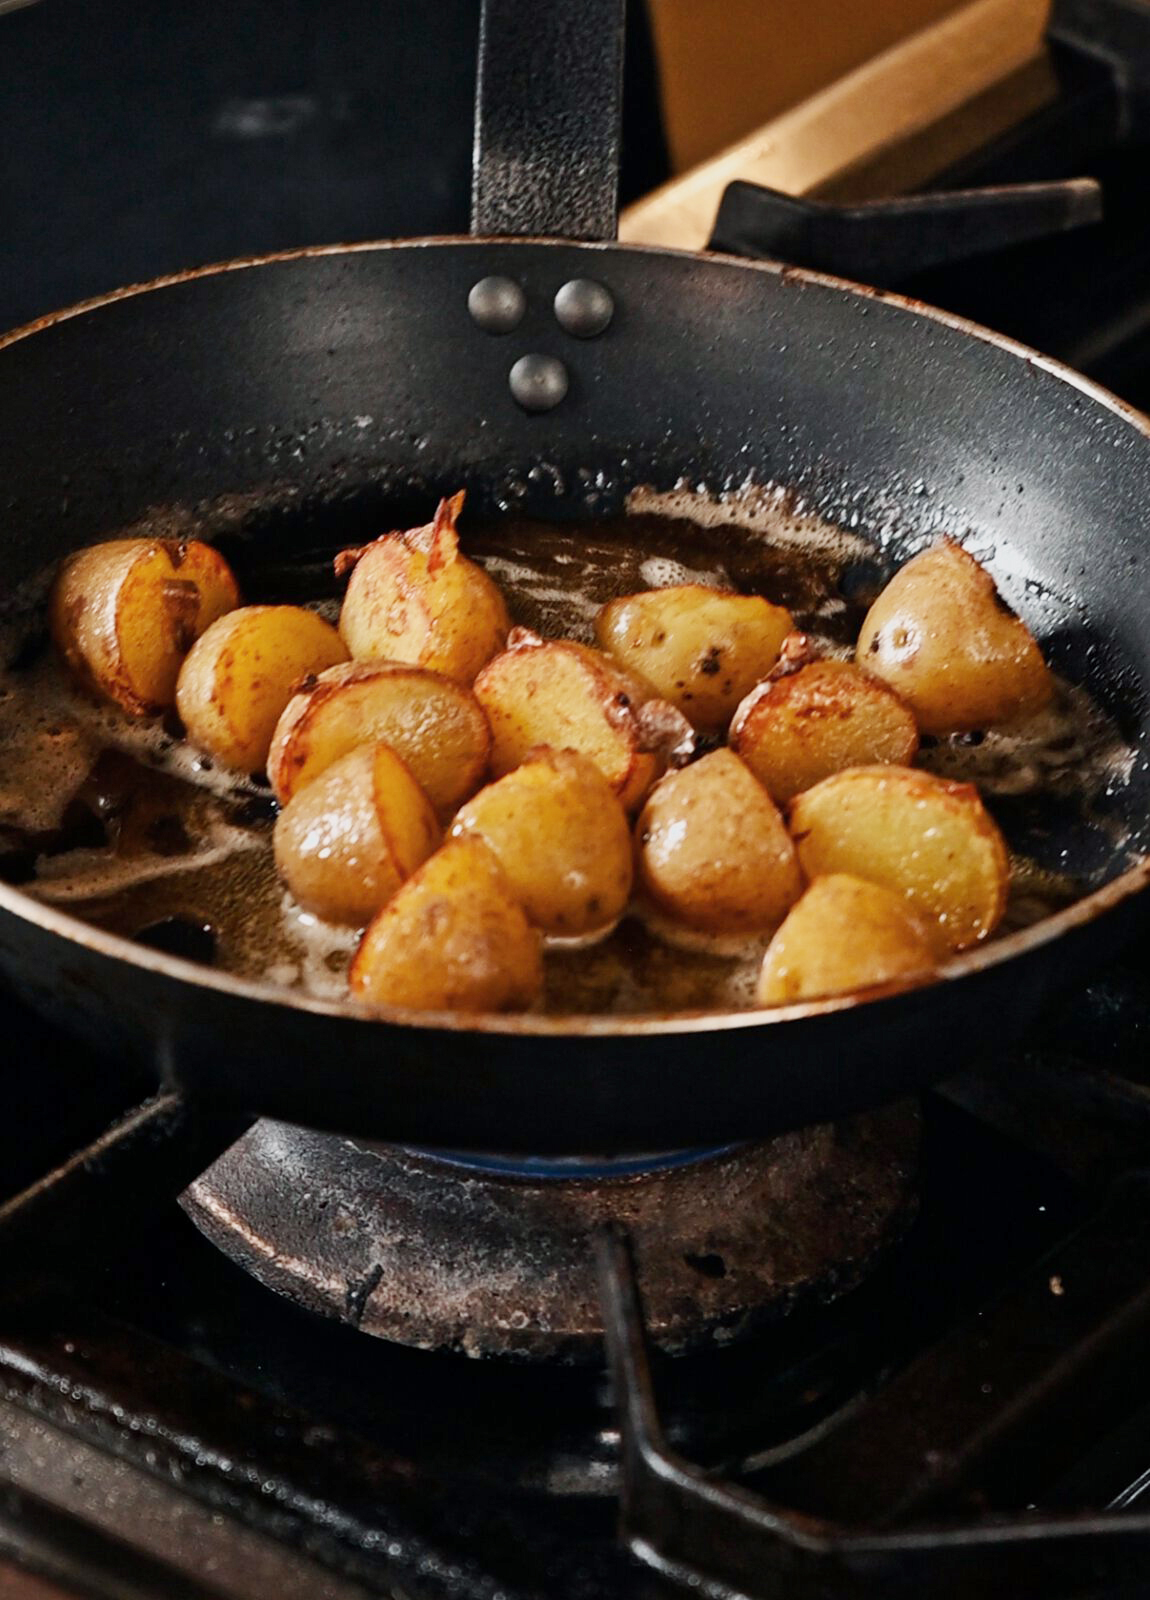 Sautéed Potatoes